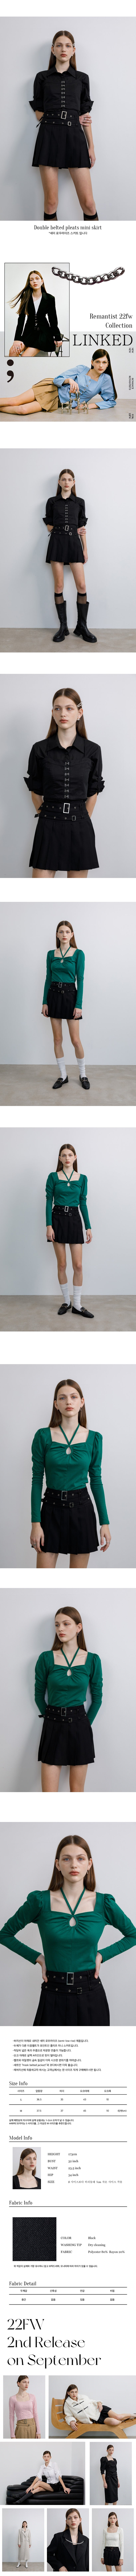 Double belted pleats mini skirt (black)